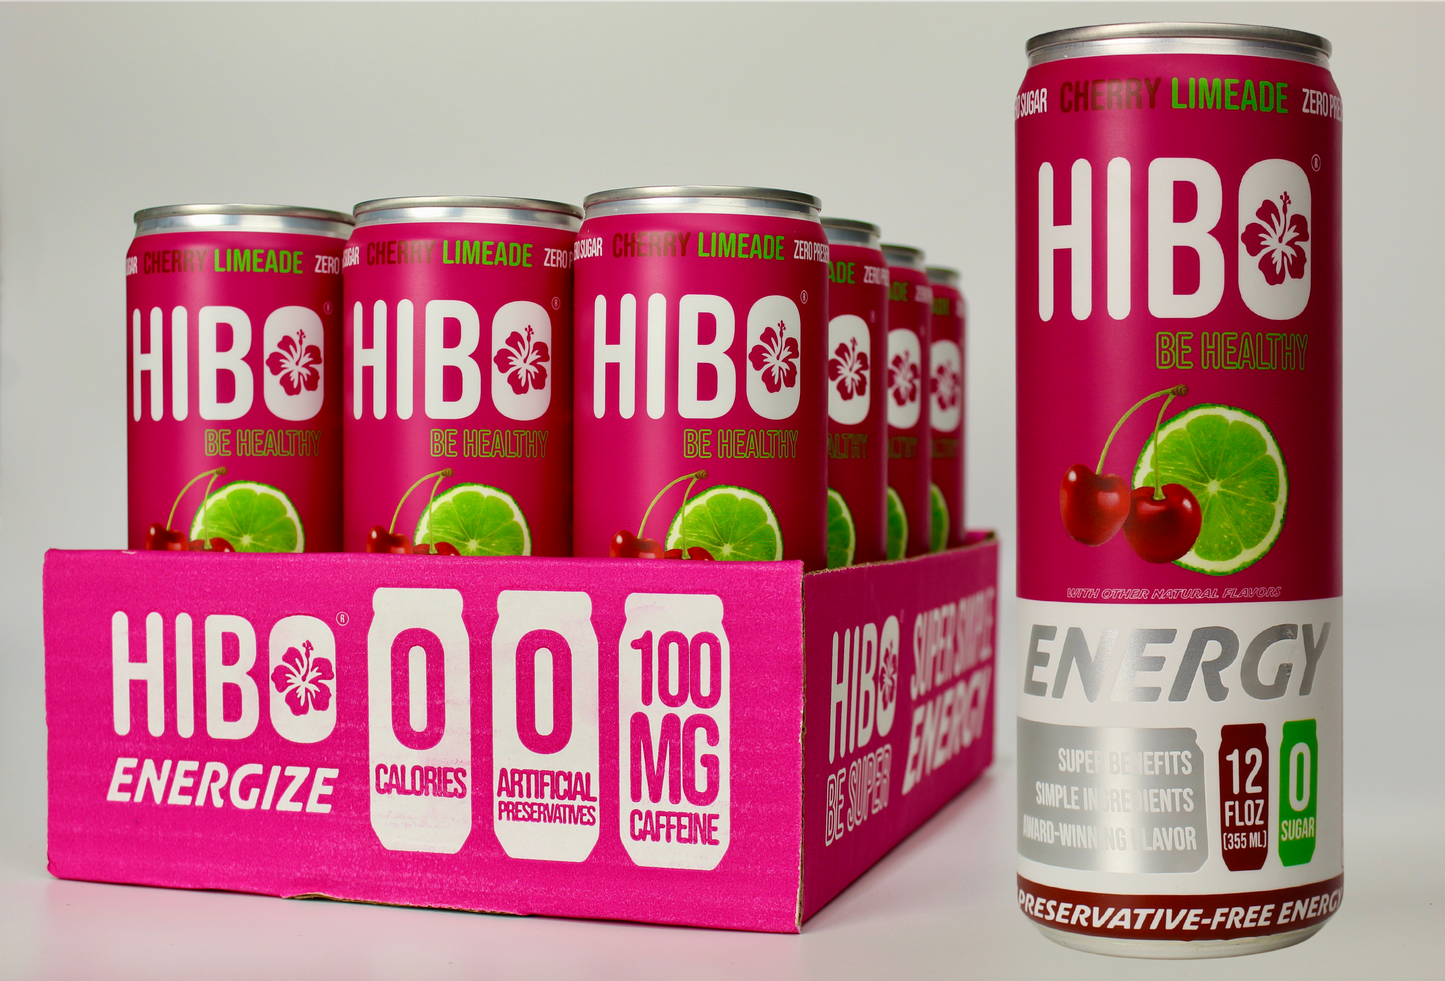 HIBO ENERGY CHERRY LIMEADE (NEW!)